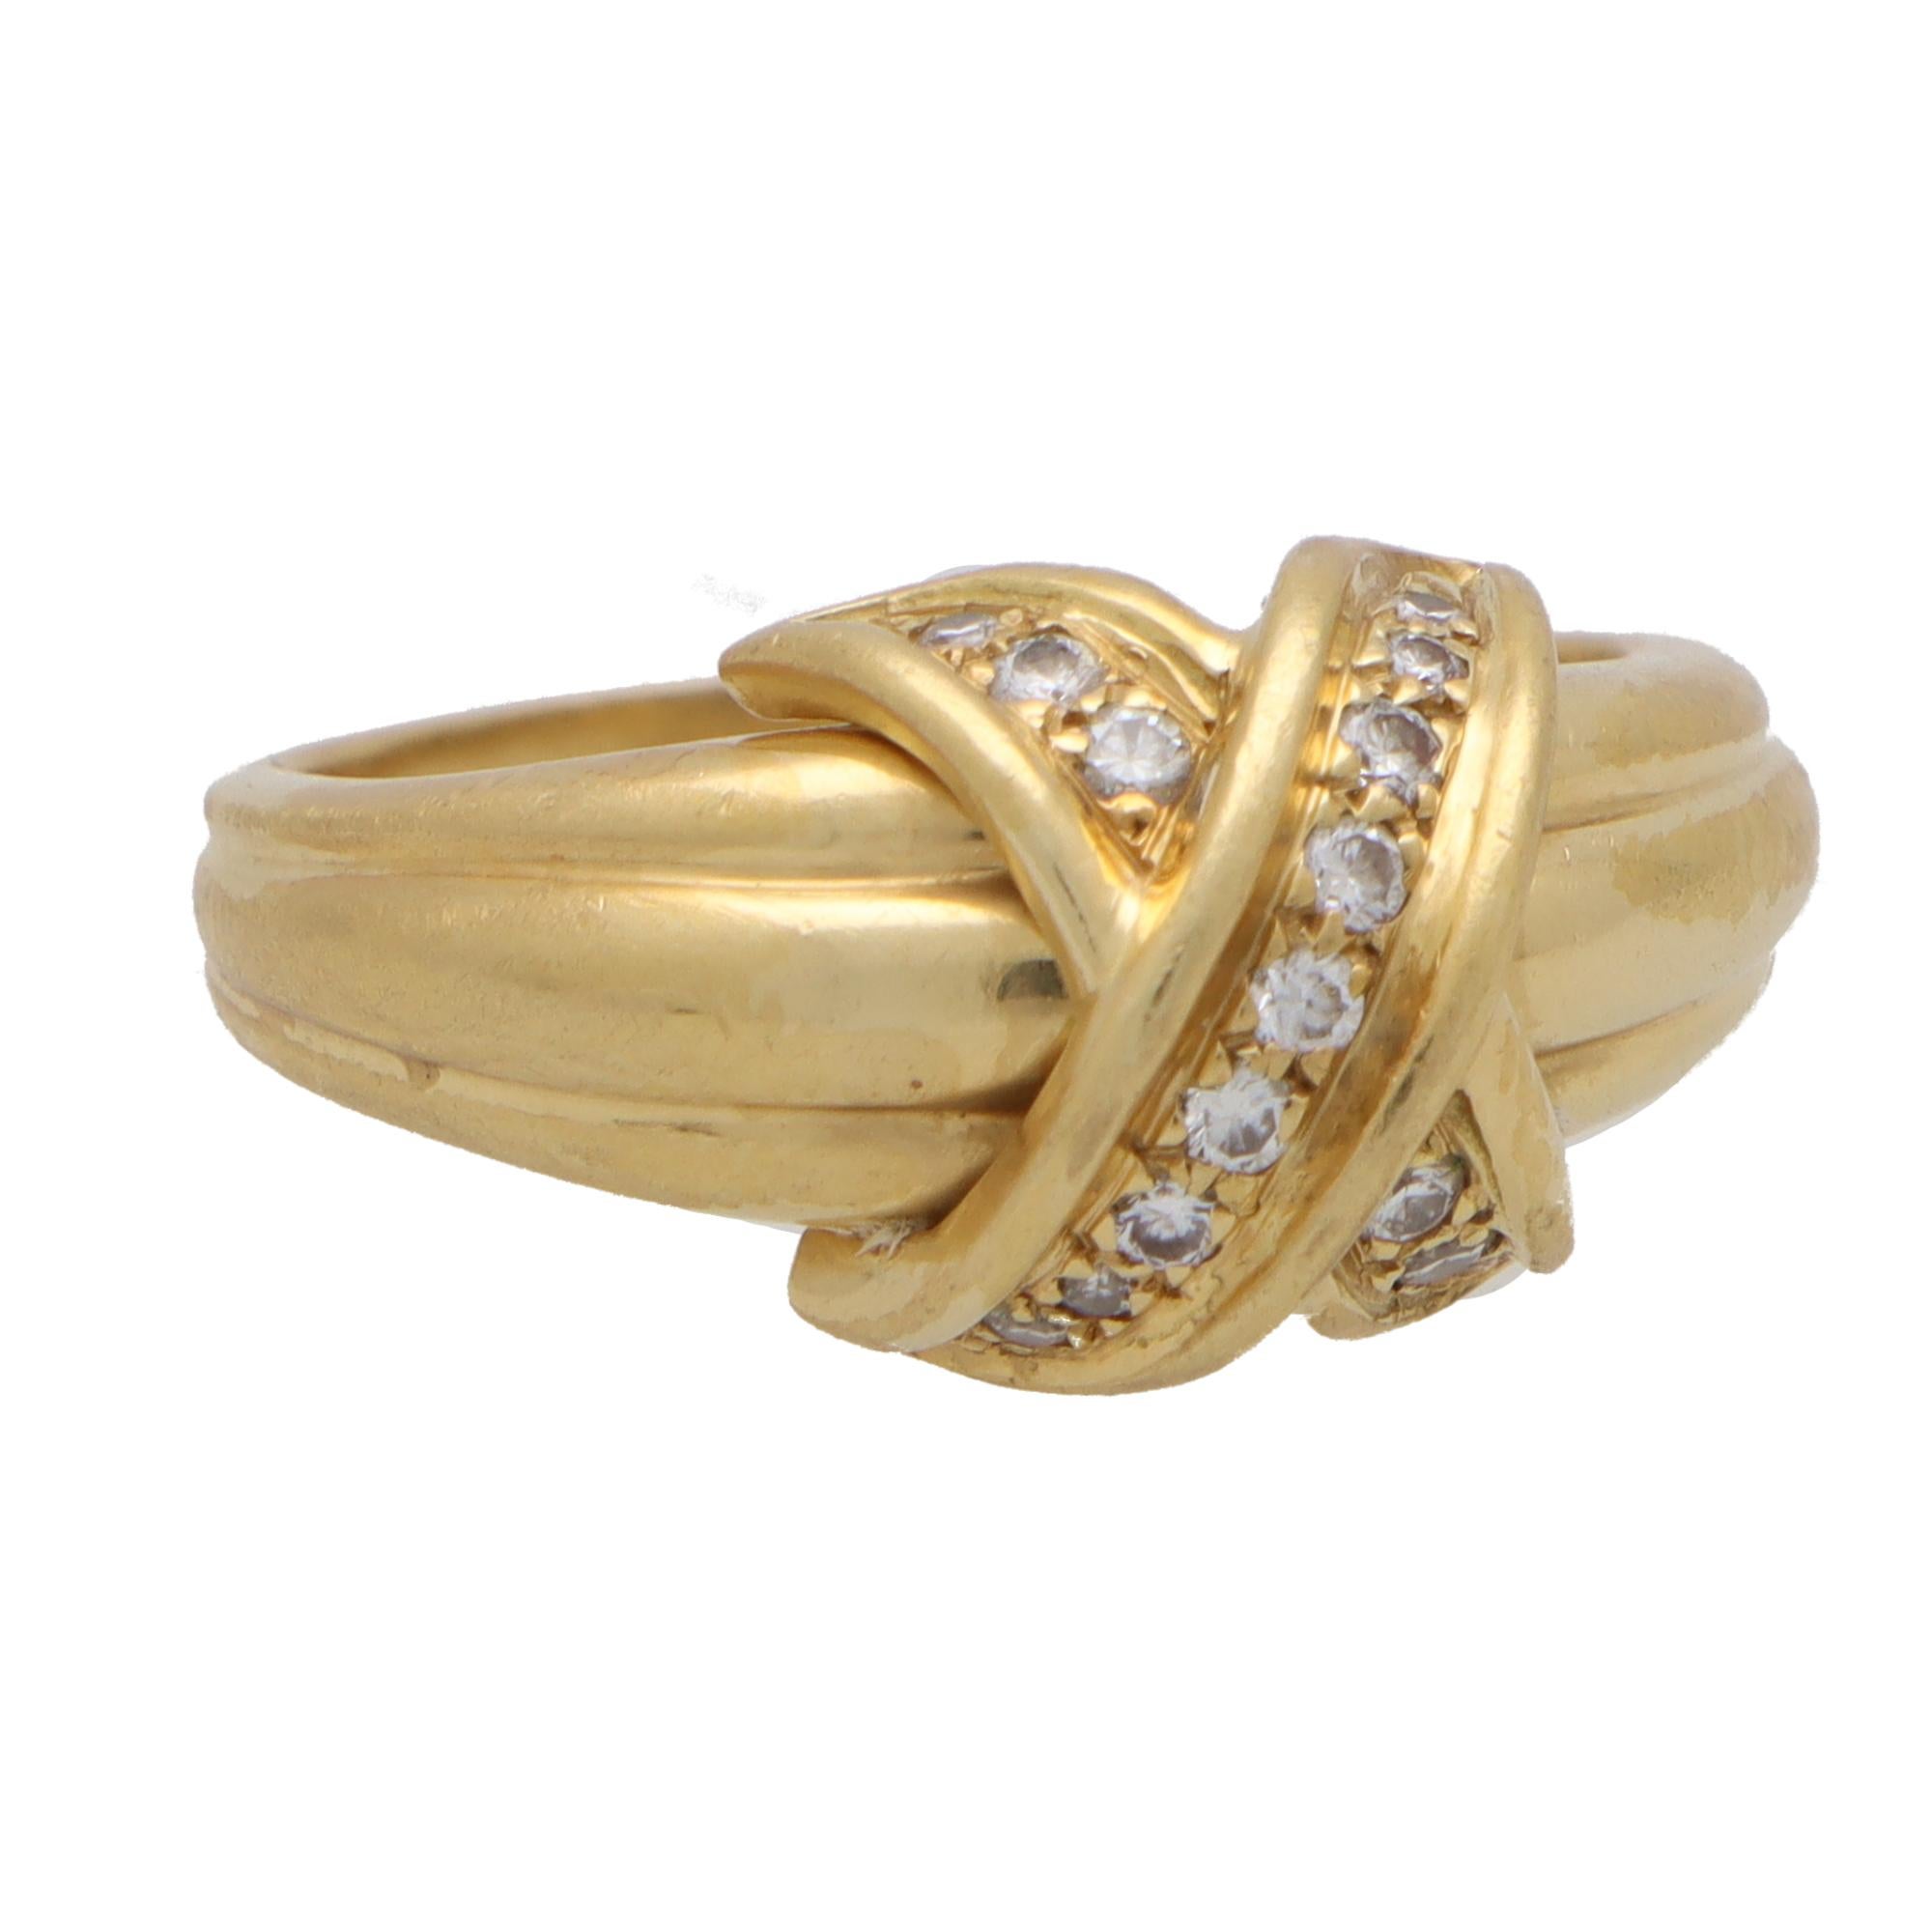 1902 18k gold ring worth